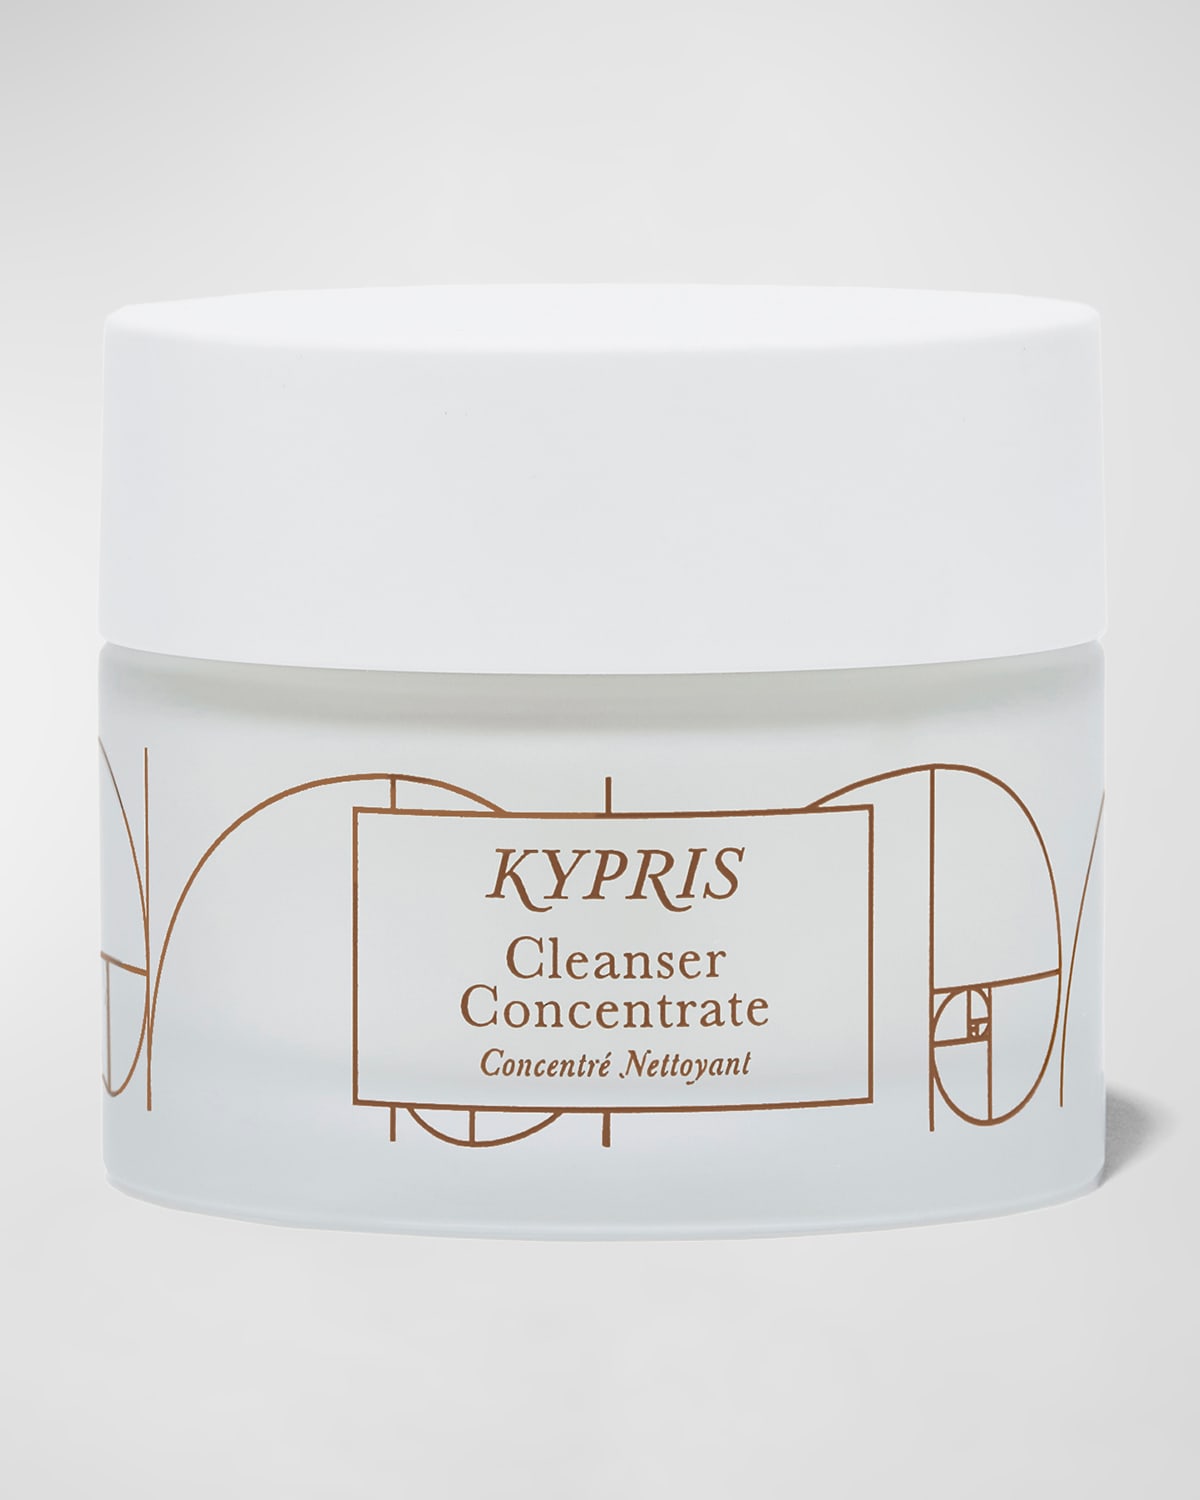 KYPRIS Cleanser Concentrate, 2.36 oz.